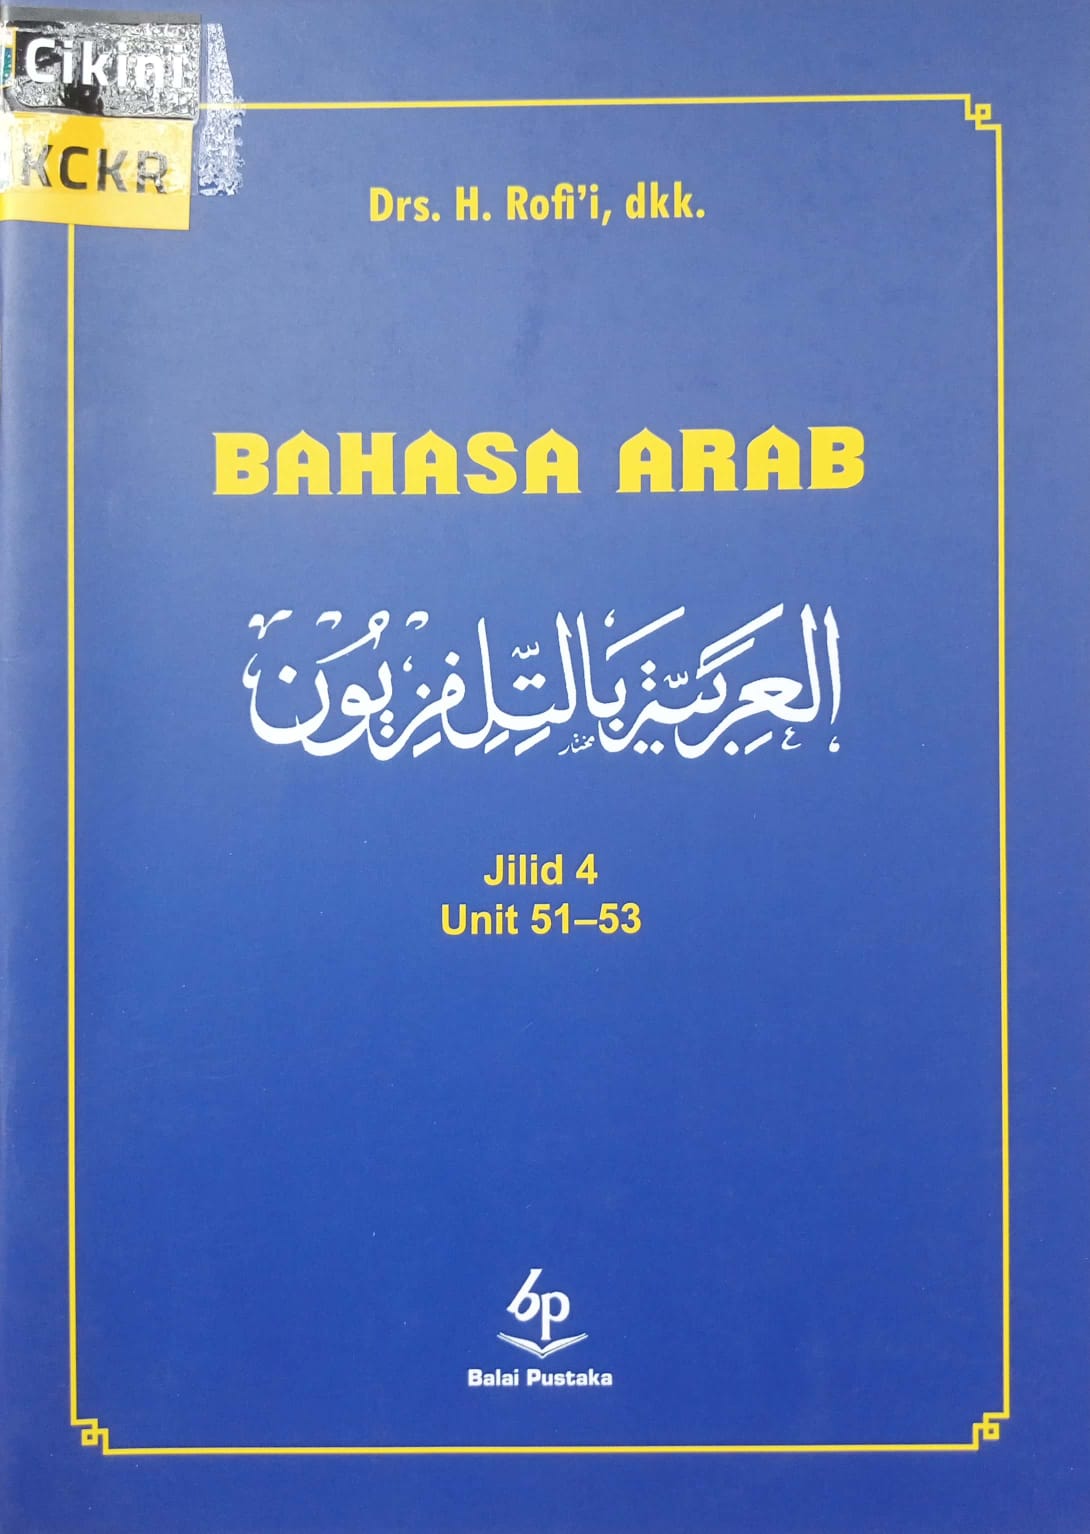 Bahasa Arab jilid 4 unit 51-53